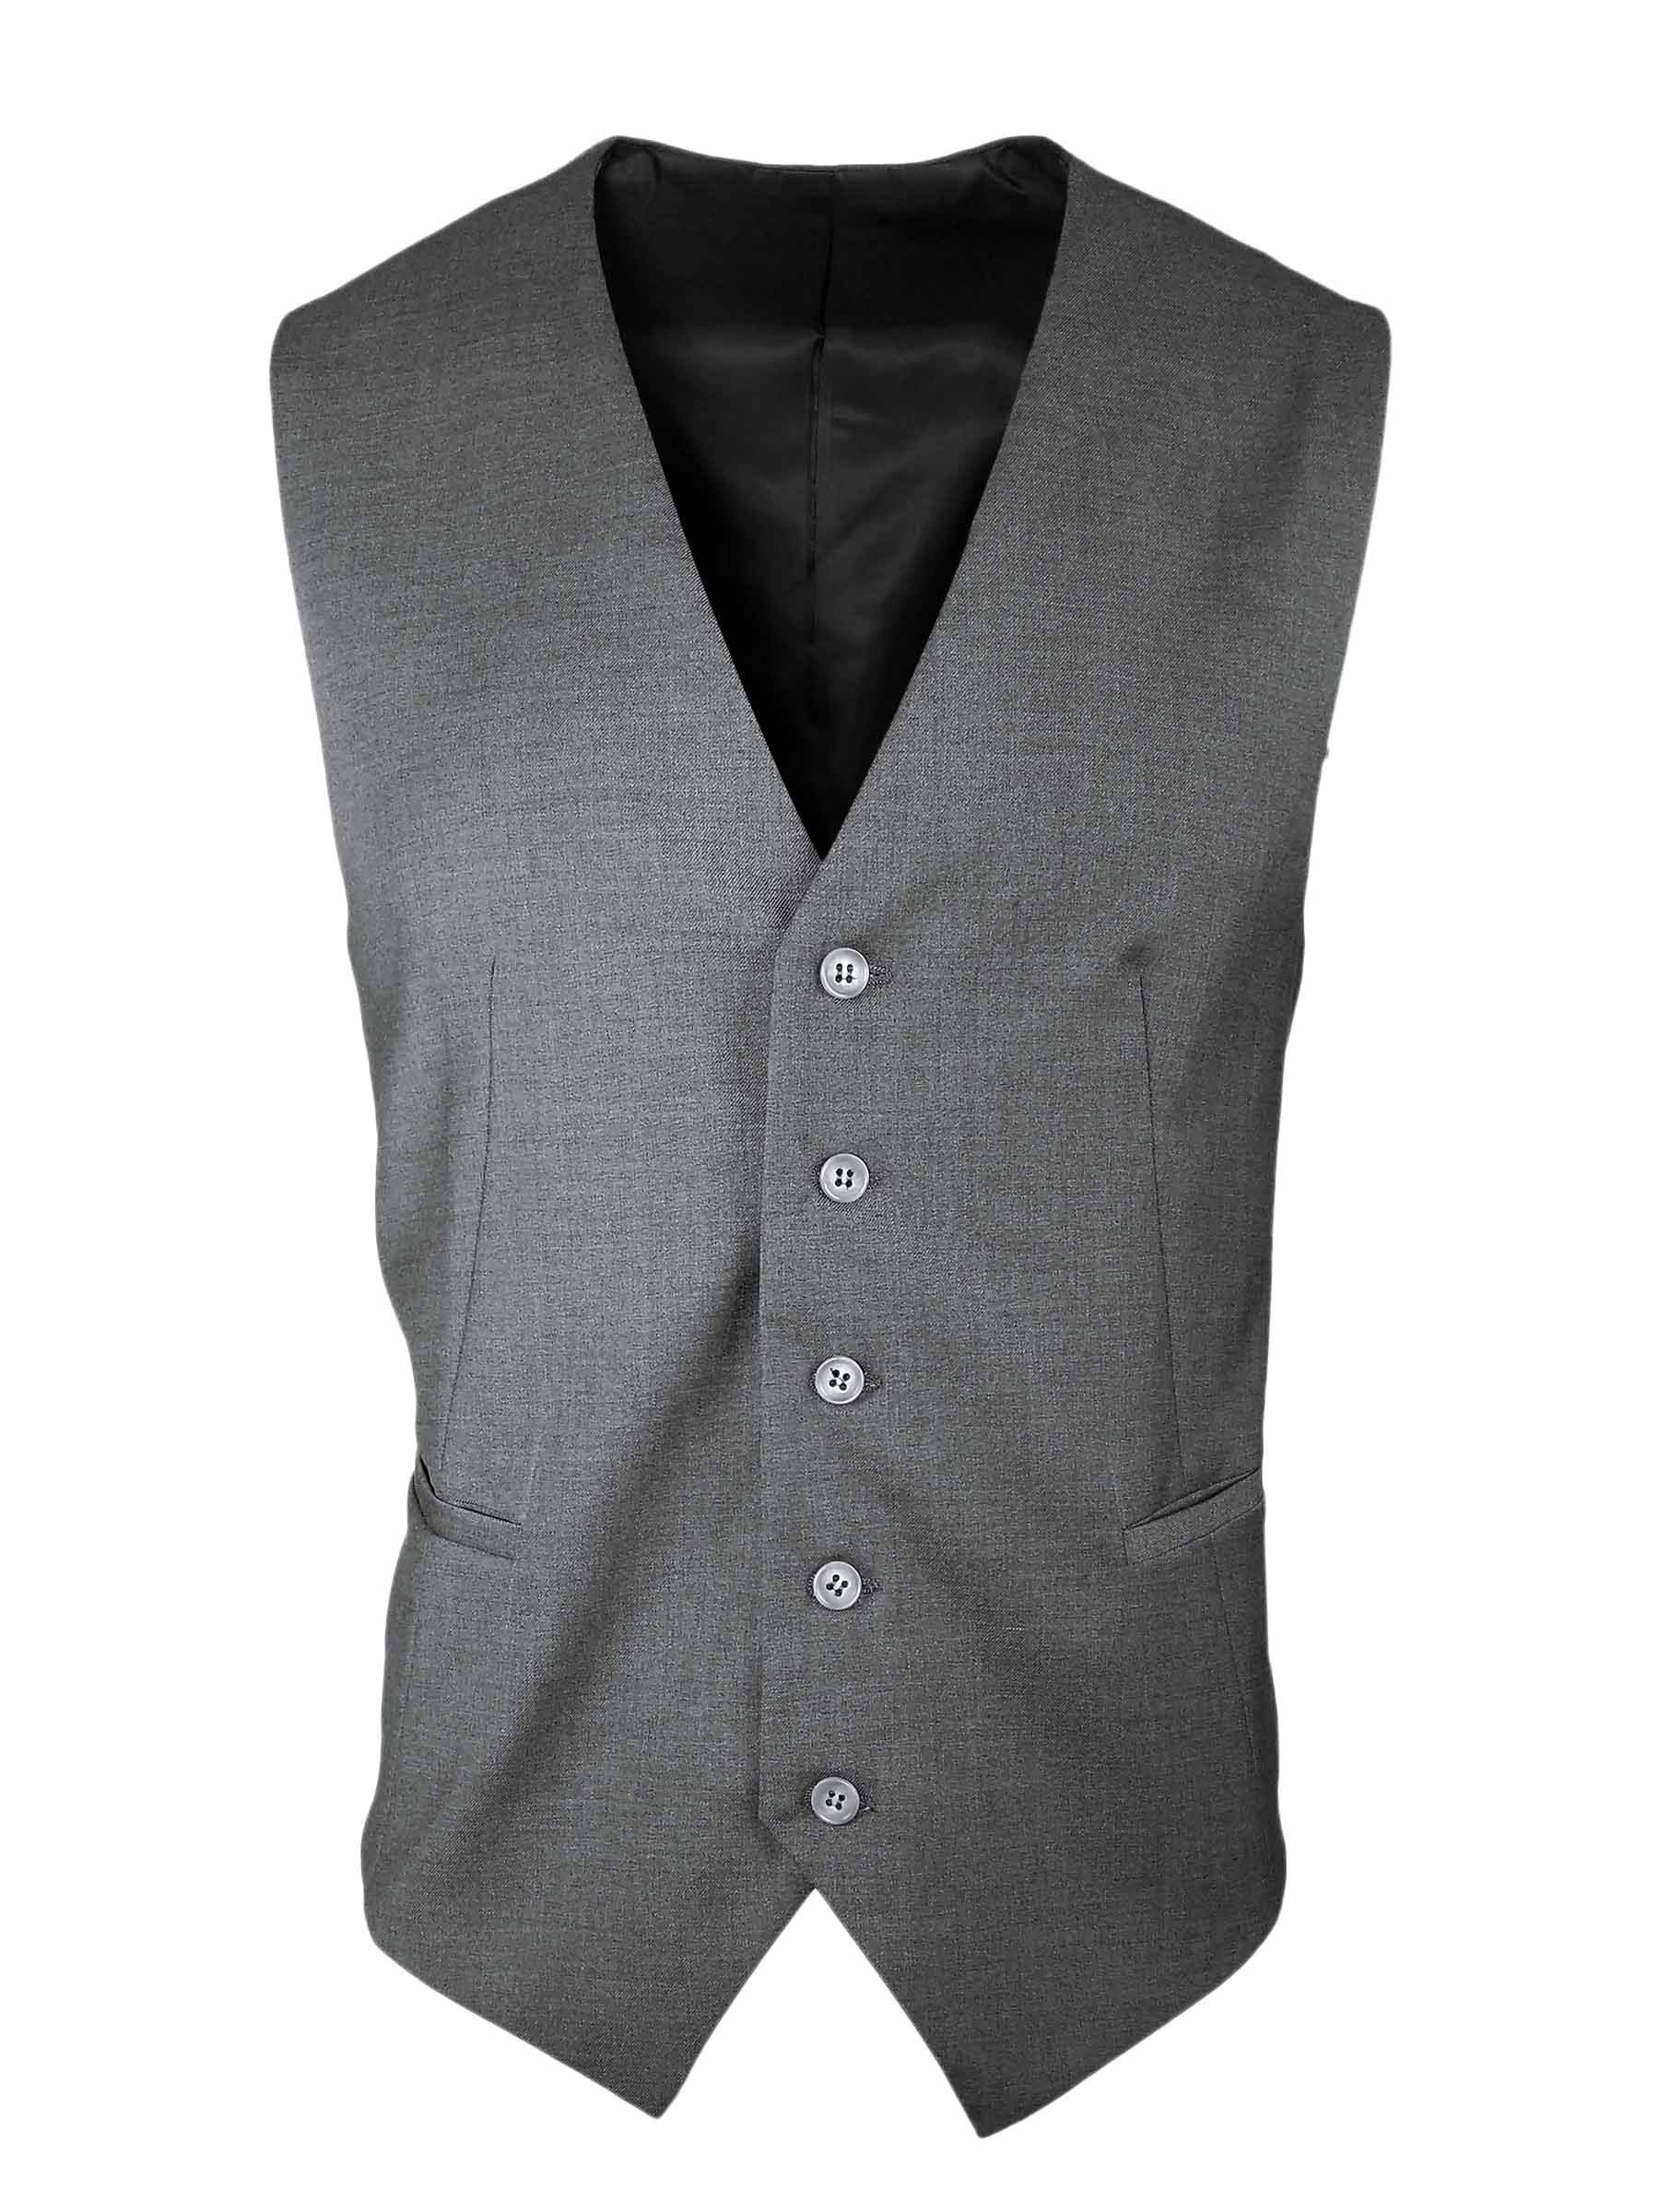 Men's Vest - Light Grey Wool Blend - Uniform Edit